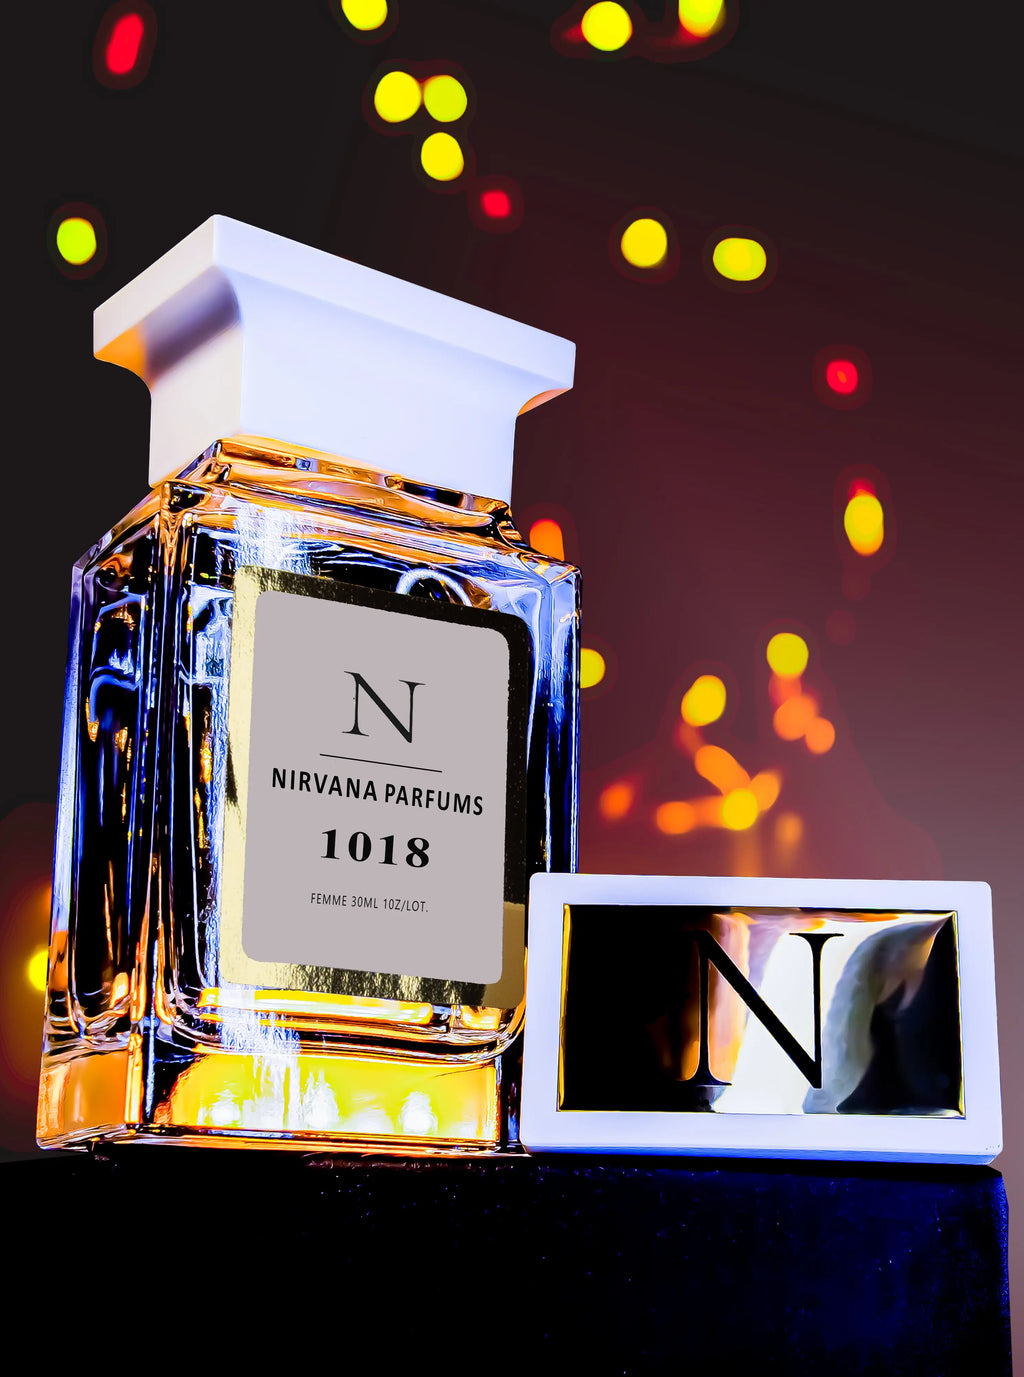 NIRVANA GOLD LINE 1018 recuerda a Baccarat Rouge 540 Extrait de Parfum. www.nirvanaparfums.es